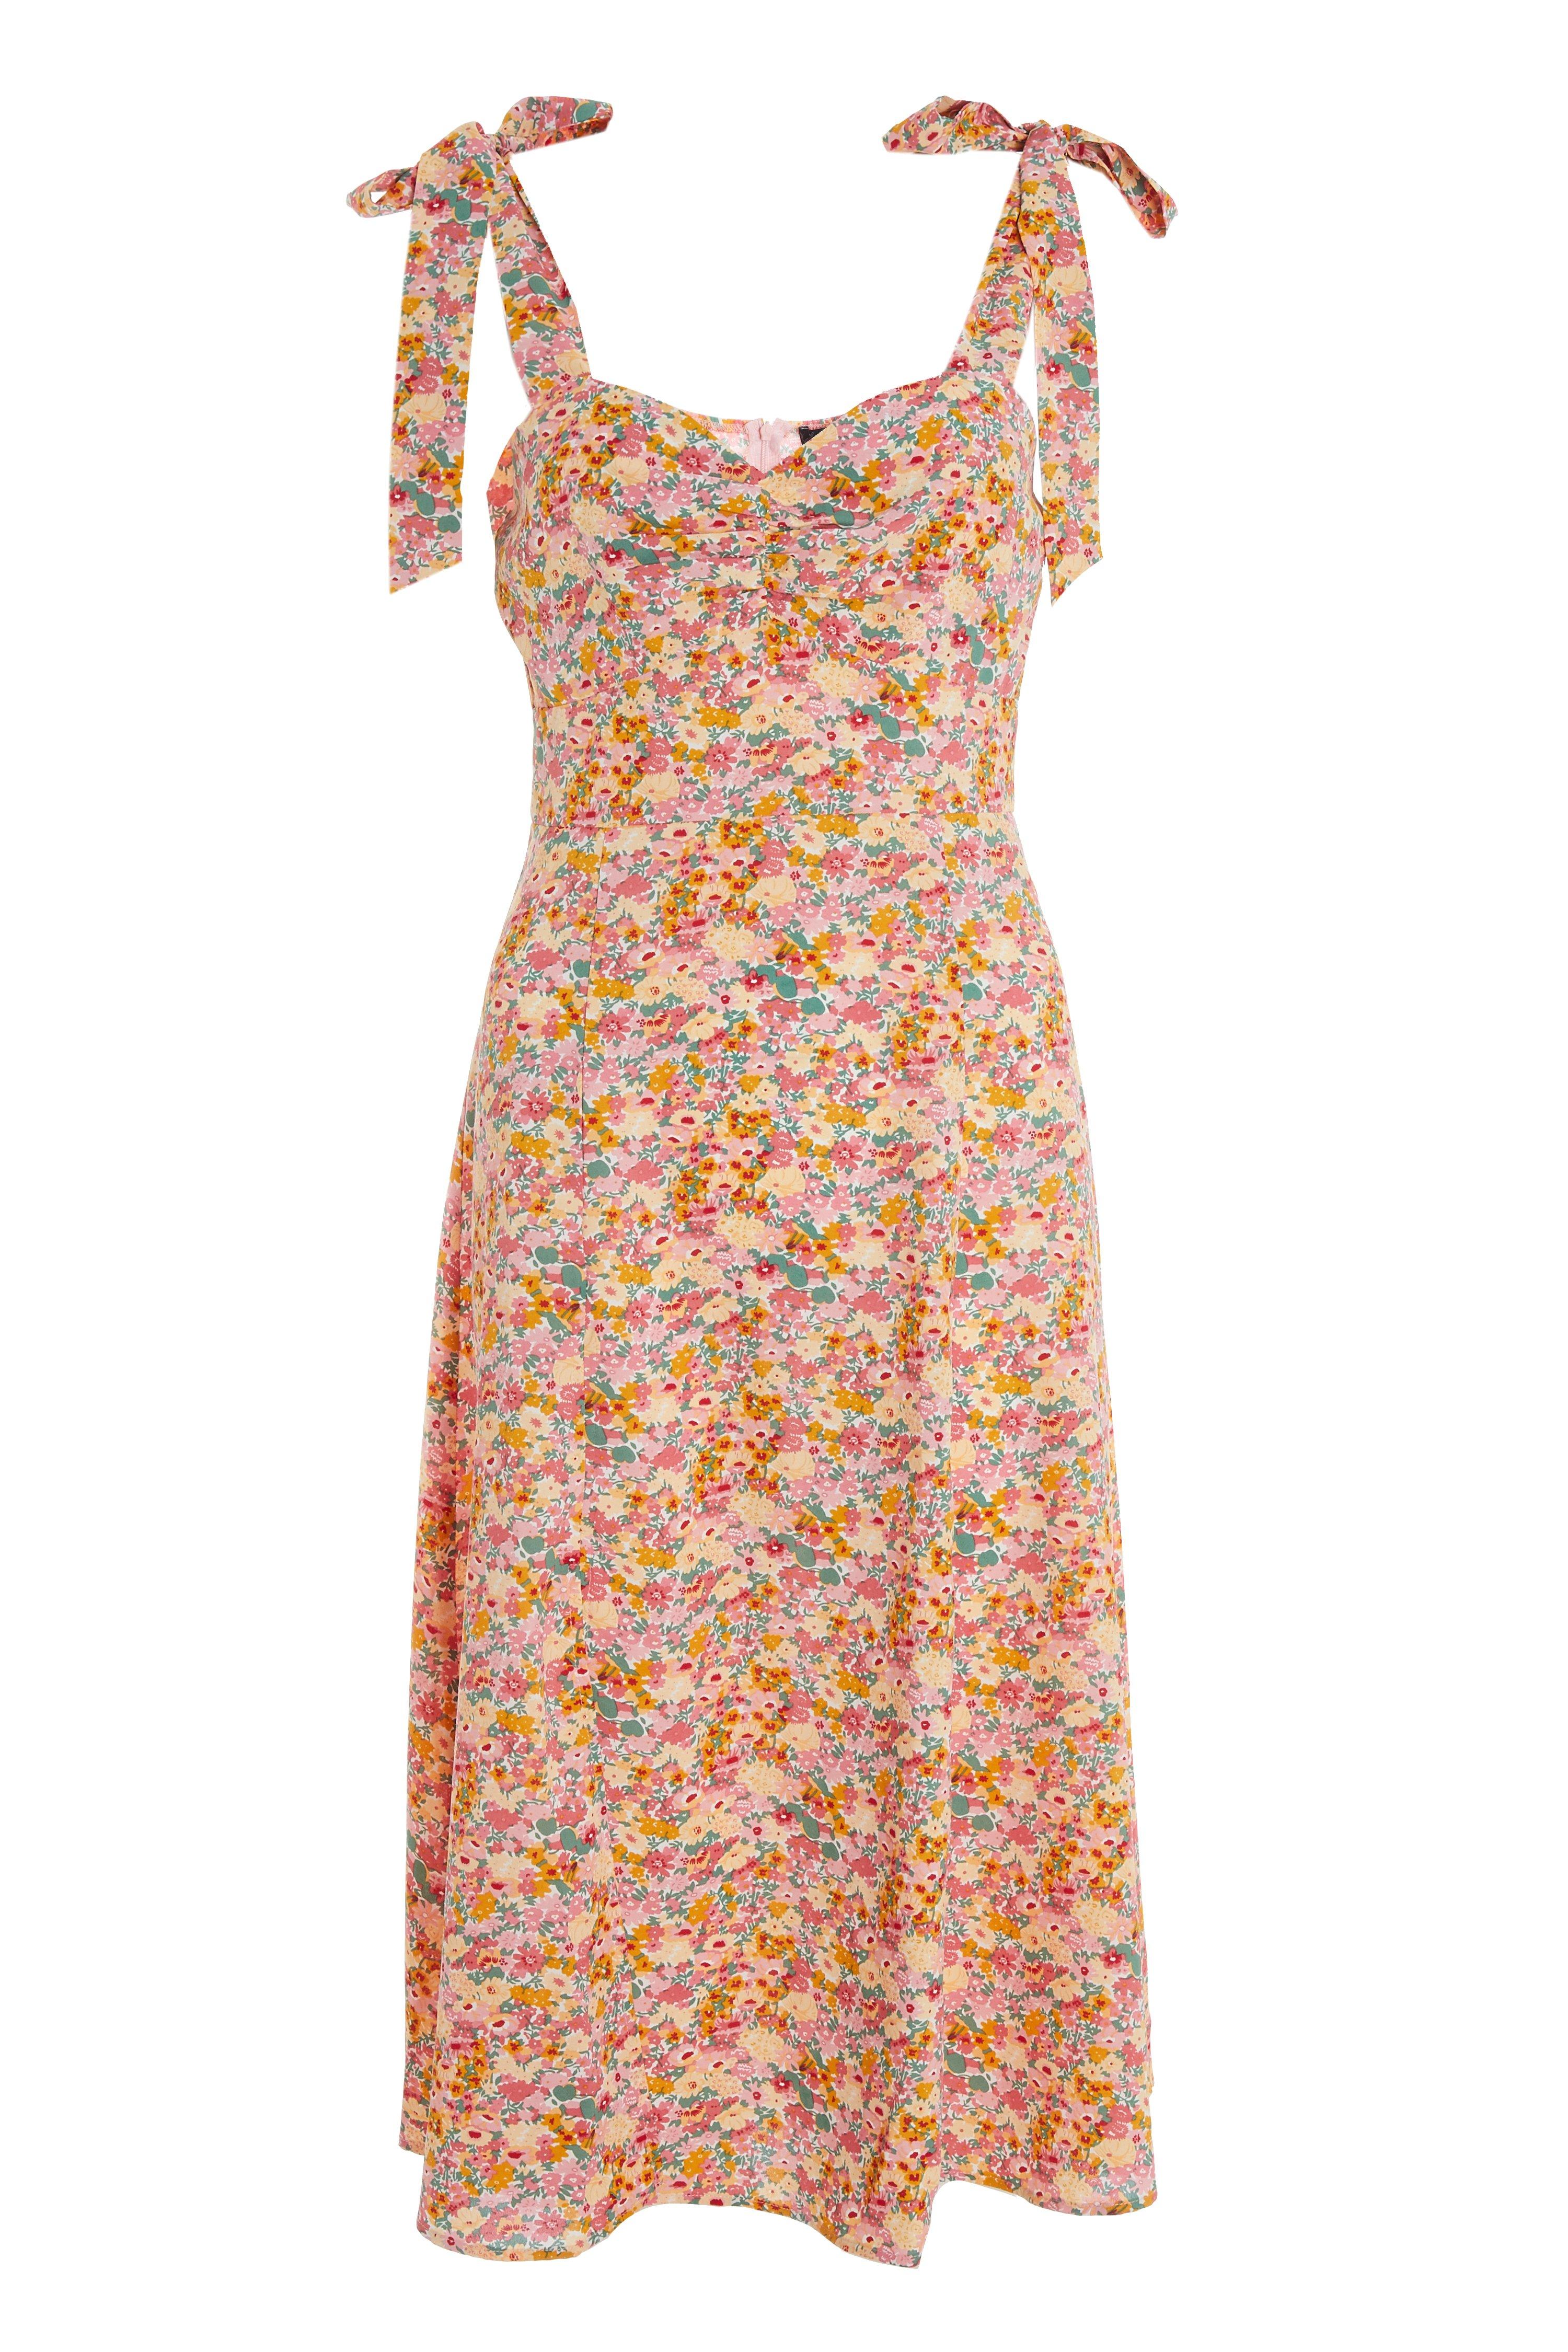 Petite Pink Floral Midi Dress - Quiz Clothing